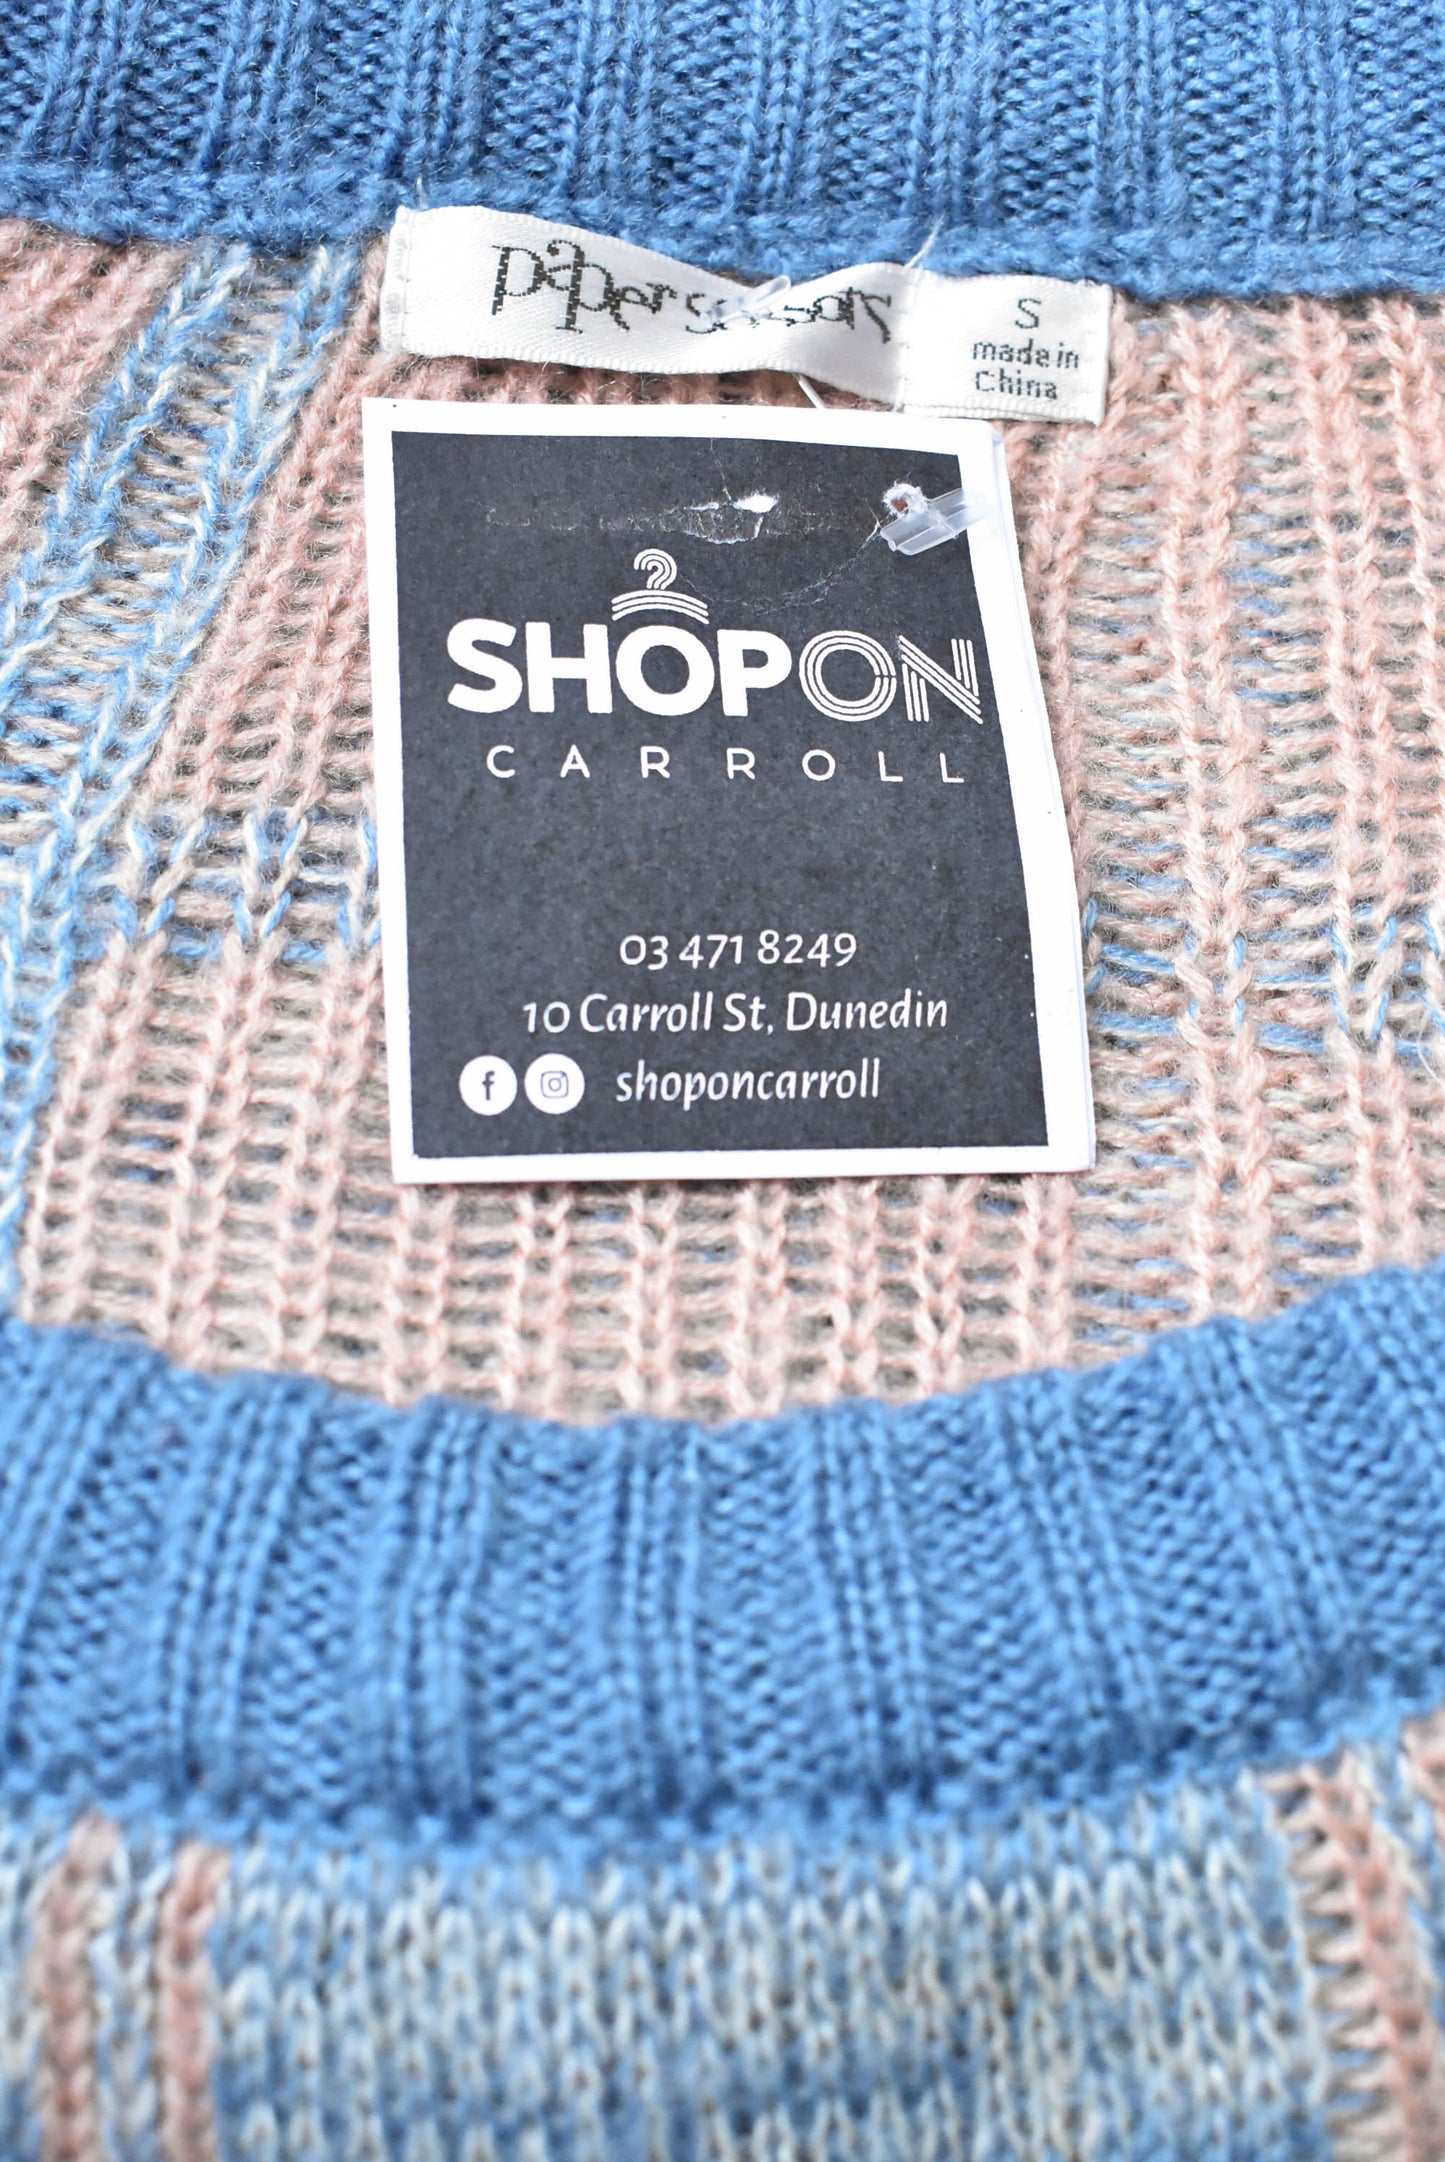 Paper Scissors sky blue knit sweater, size S